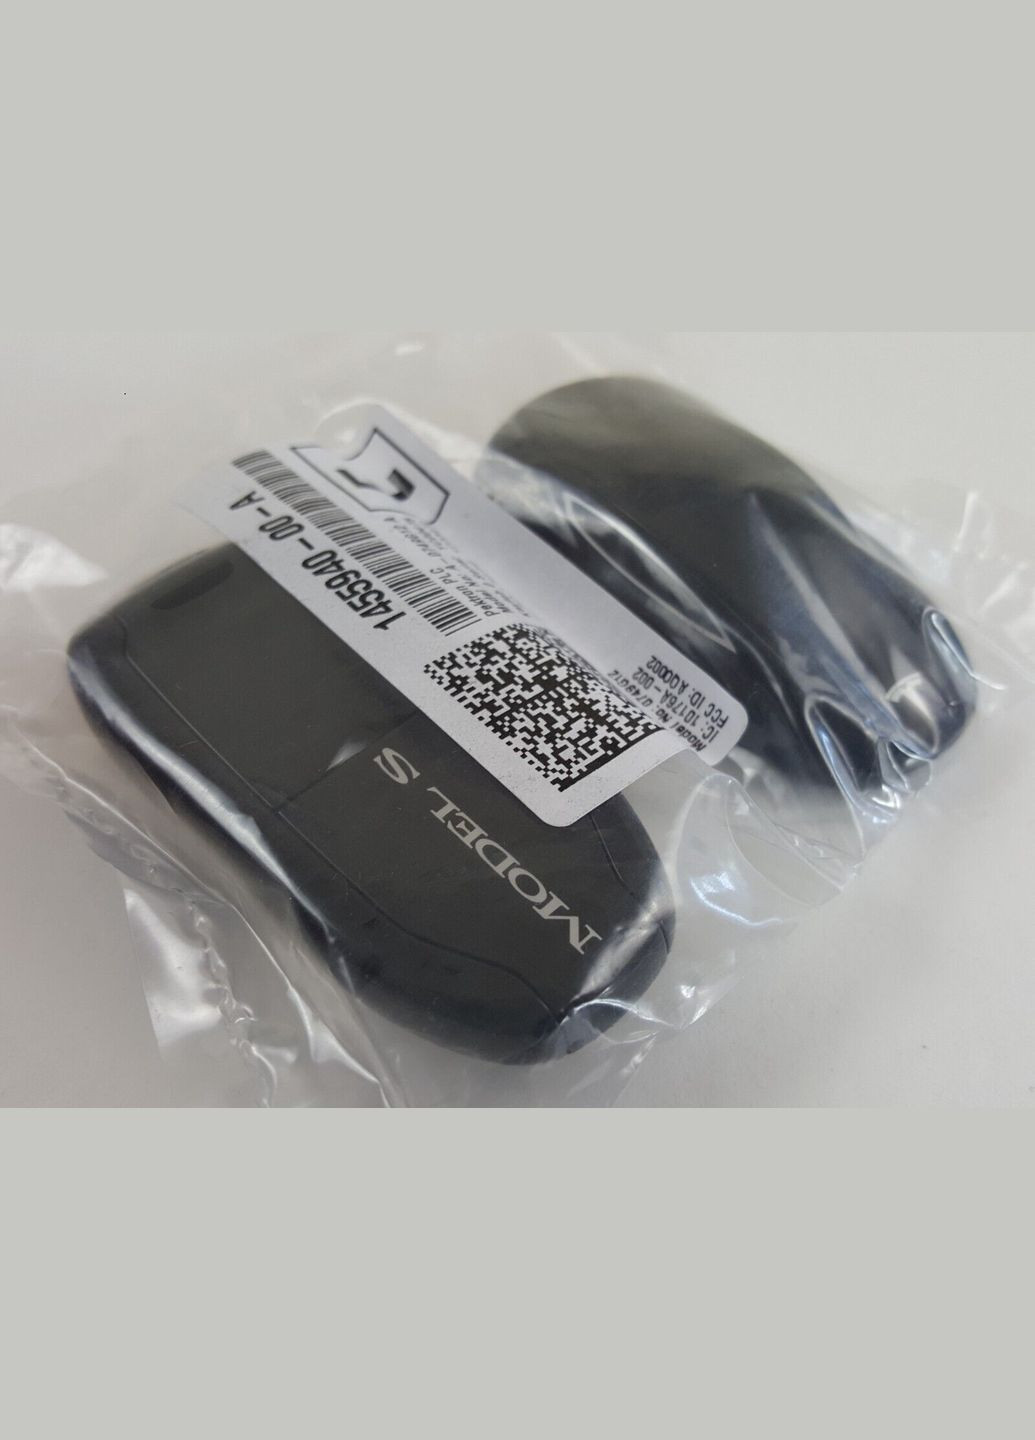 Смарт ключ для авто Model S Smart Key 315Mhz Remote Fob 20122019 Tesla (292324071)